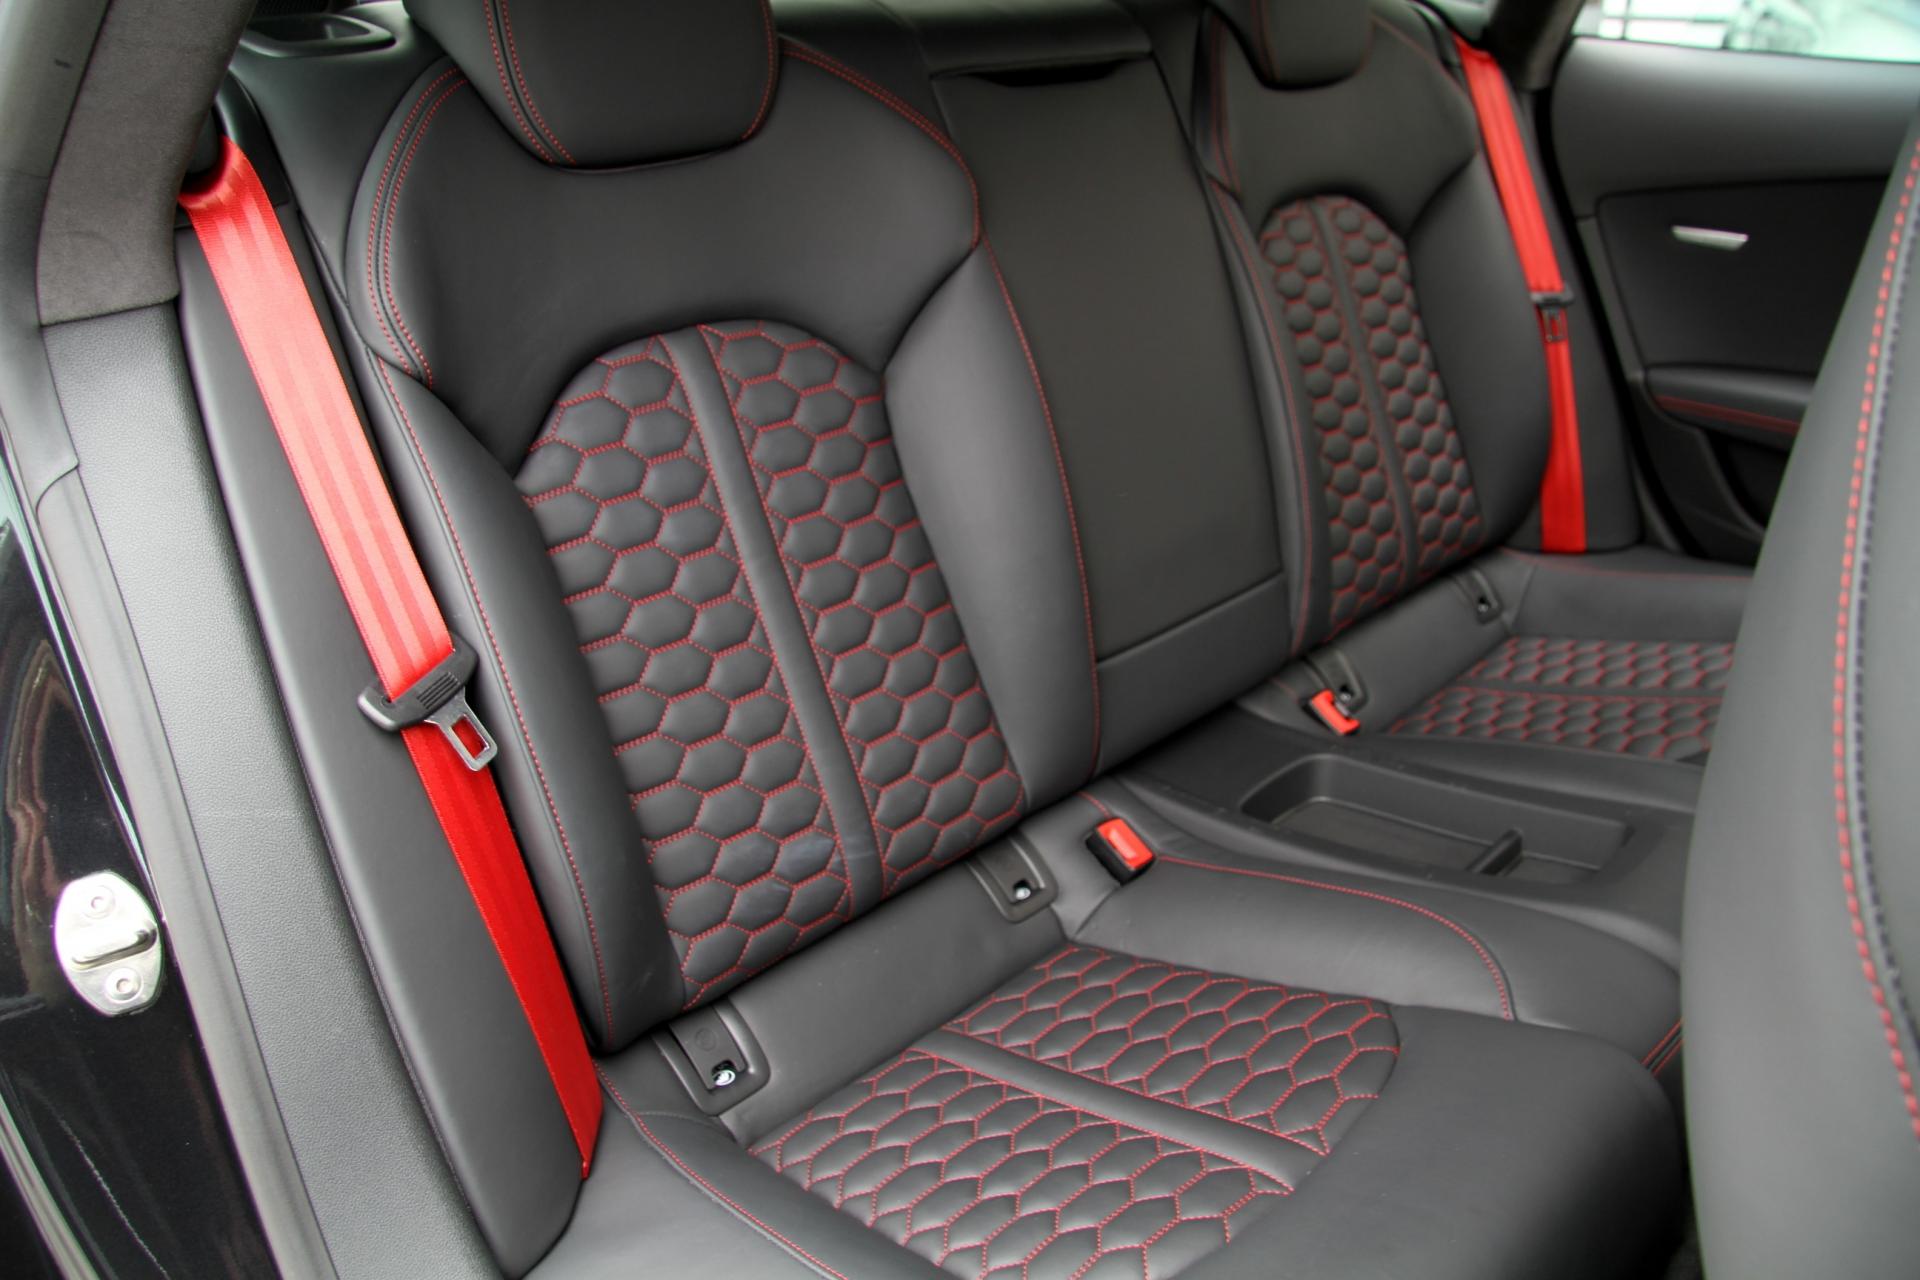 Express red interior | Audi TT Forum